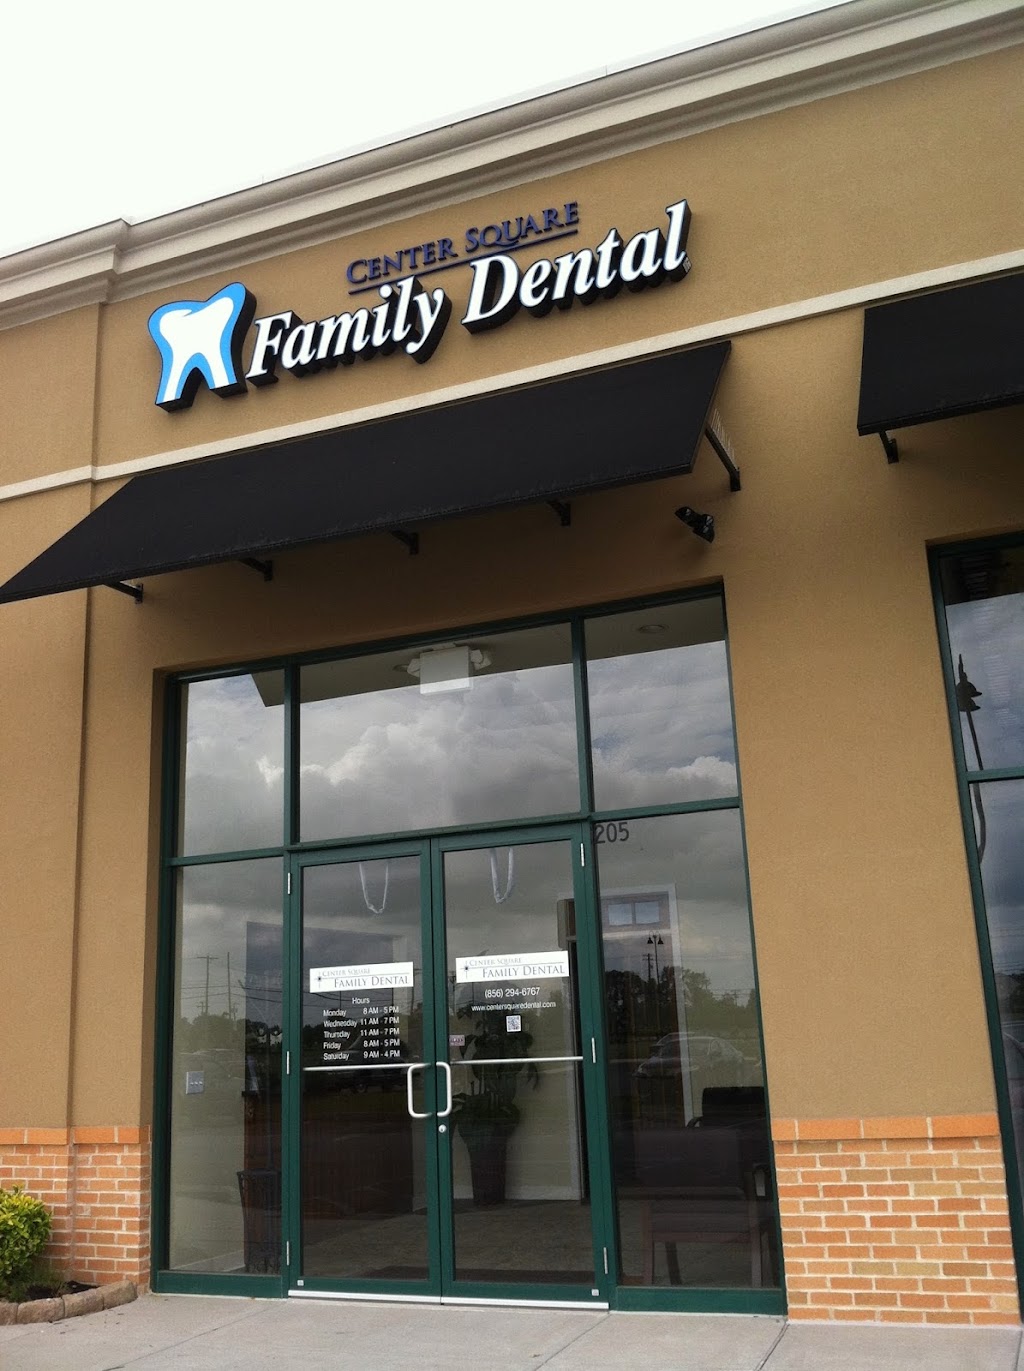 Center Square Family Dental | 120 Center Square Rd Ste 205, Swedesboro, NJ 08085 | Phone: (856) 294-6767